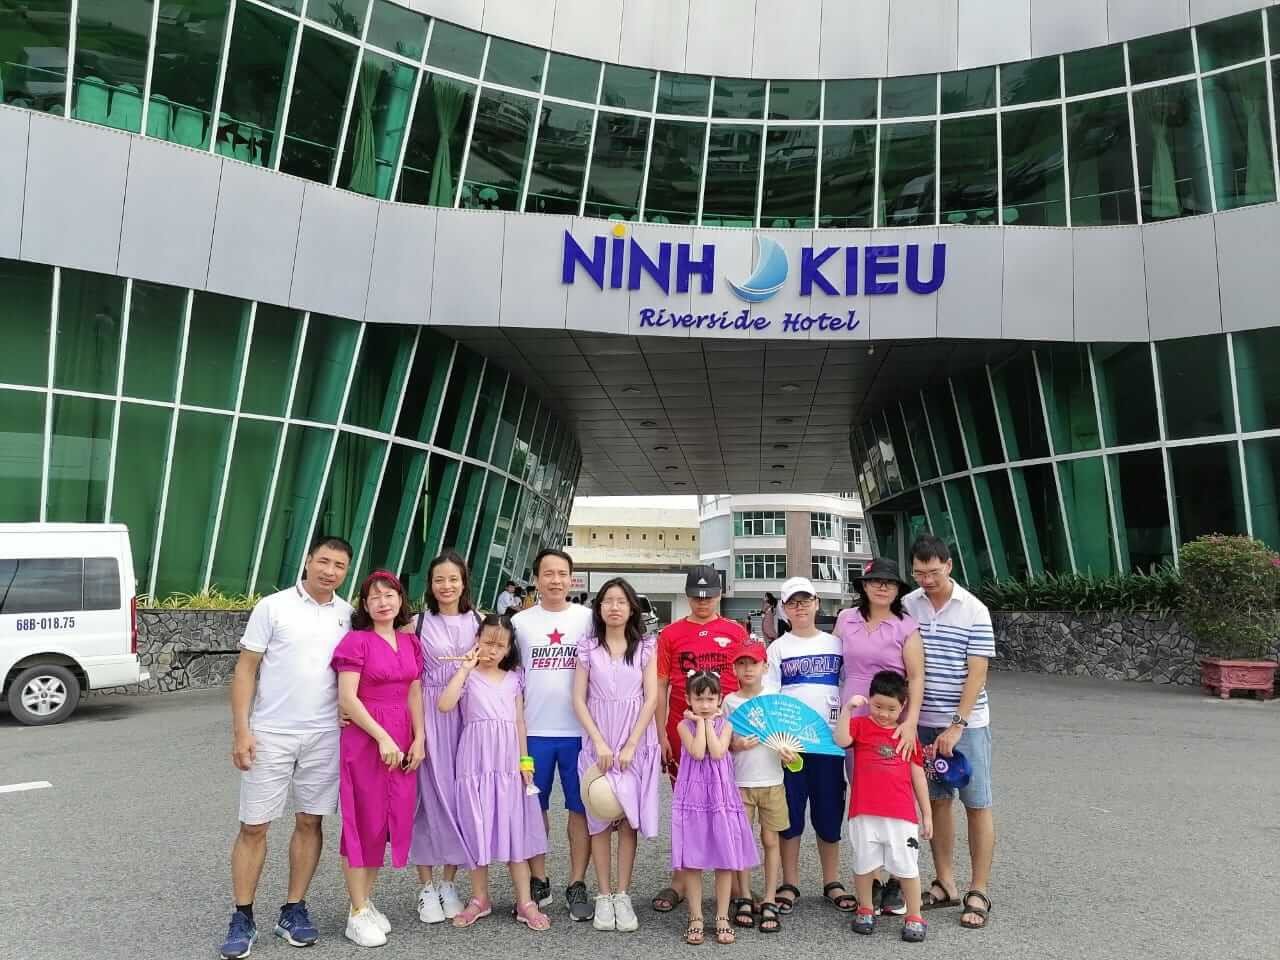 Ninh Kieu hotel